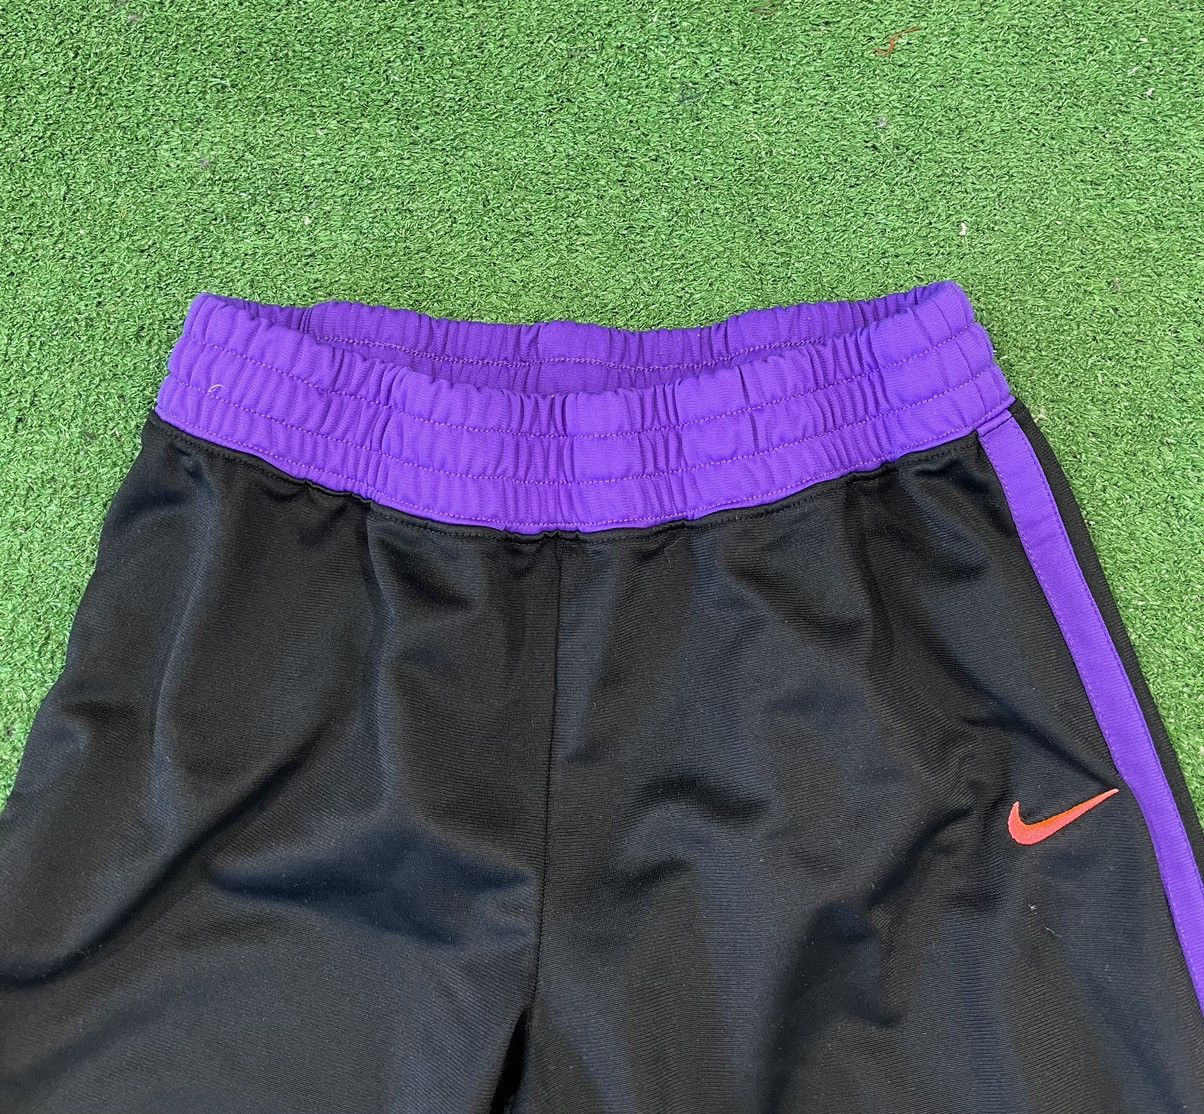 Nike Nike sweatpants Swoosh Vintage Size US 26 / EU 42 - 3 Thumbnail